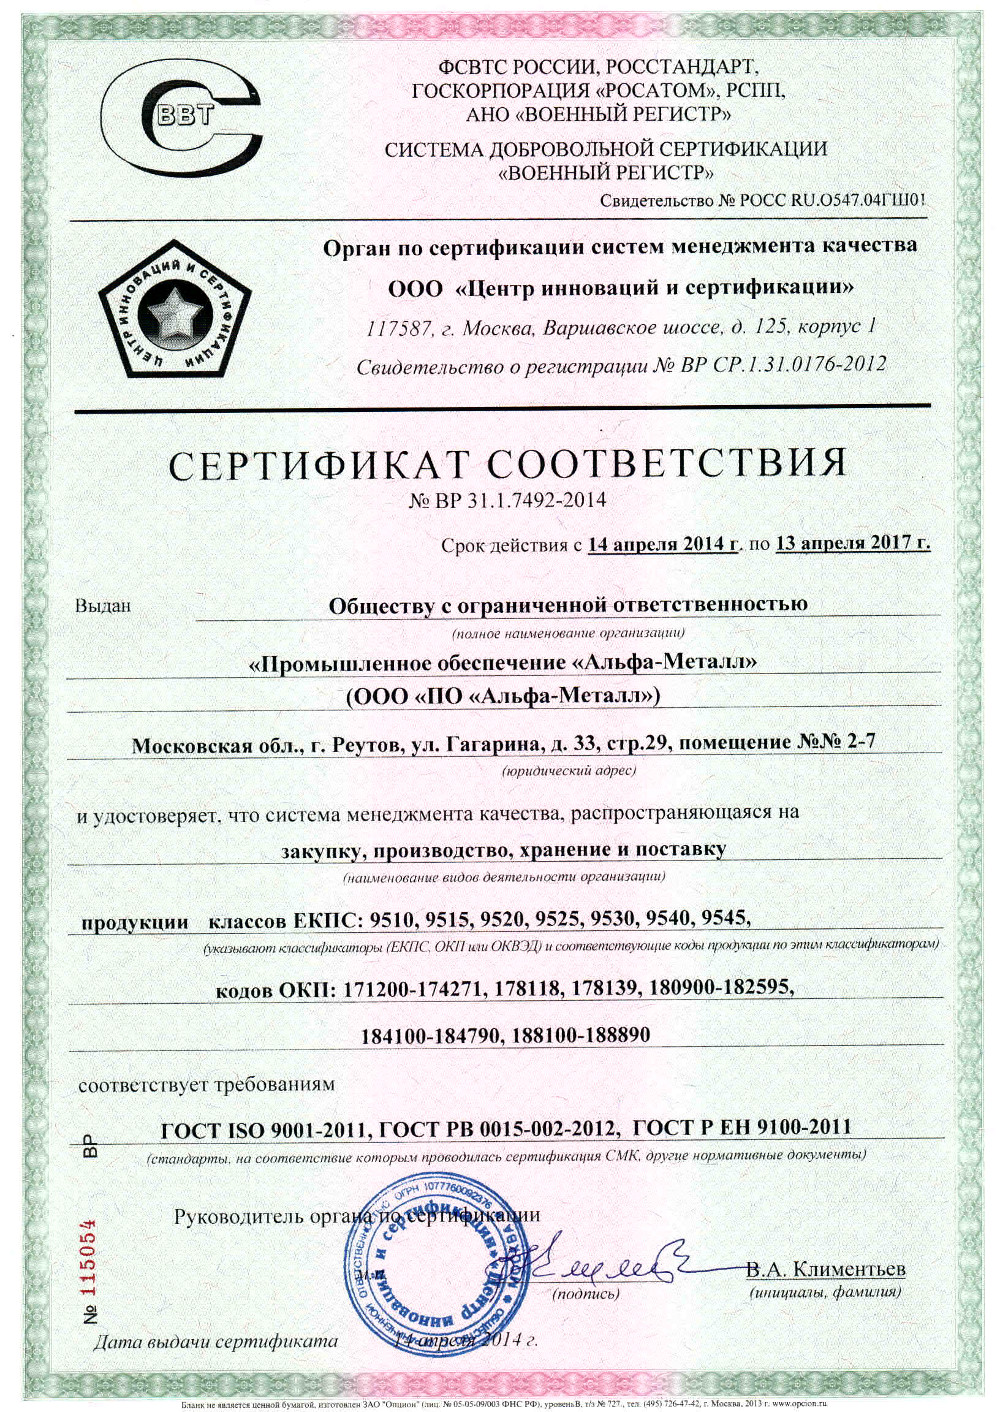 Cертификация  стандартам ГОСТ РВ 0015-002-2012 и ГОСТ Р ЕН 9100-2011